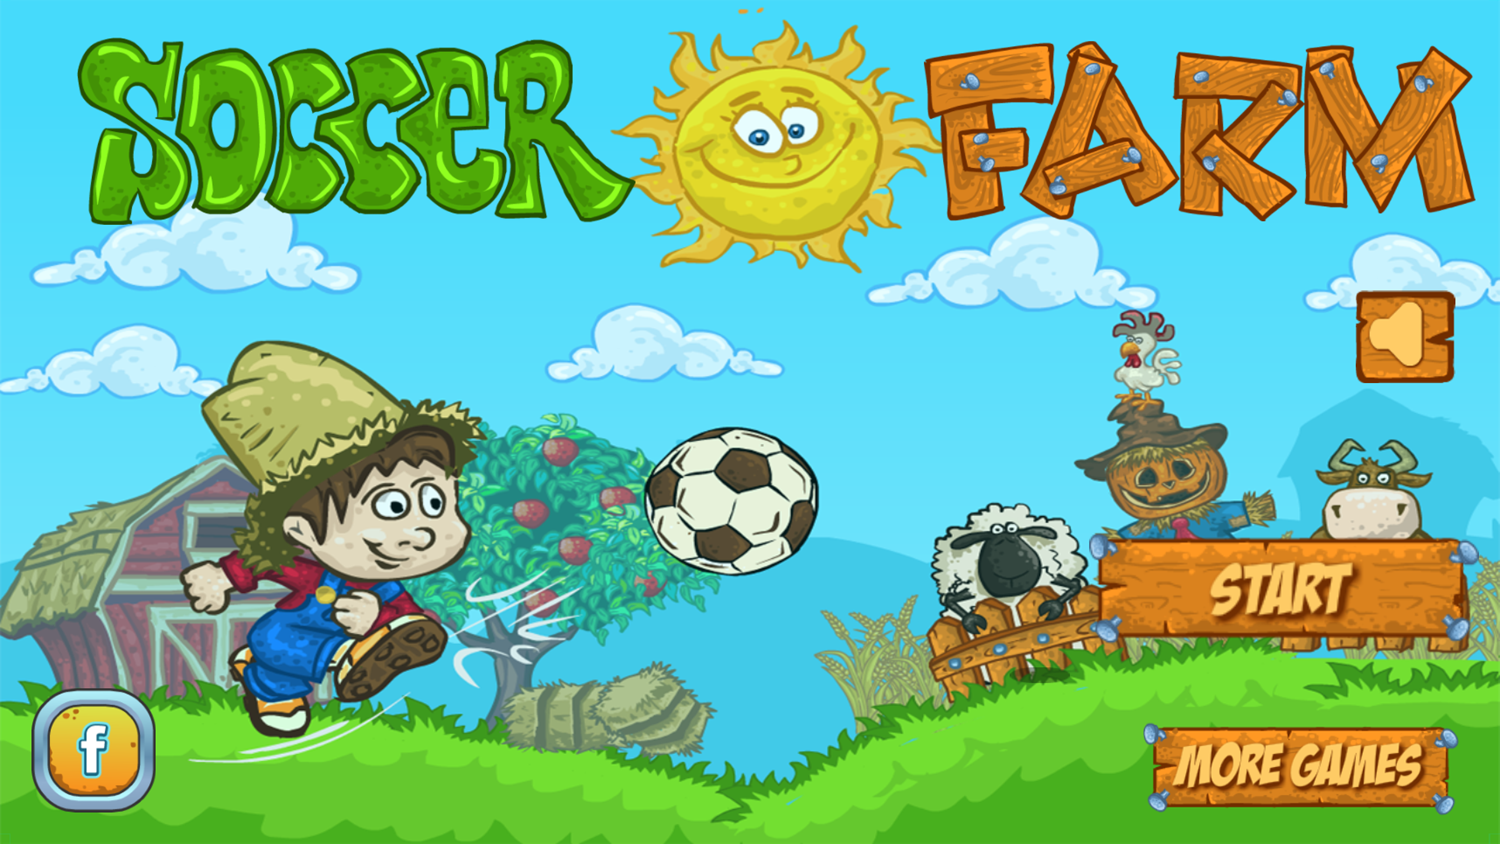 Soccer Farm Game Welcome Screen Screenshot.